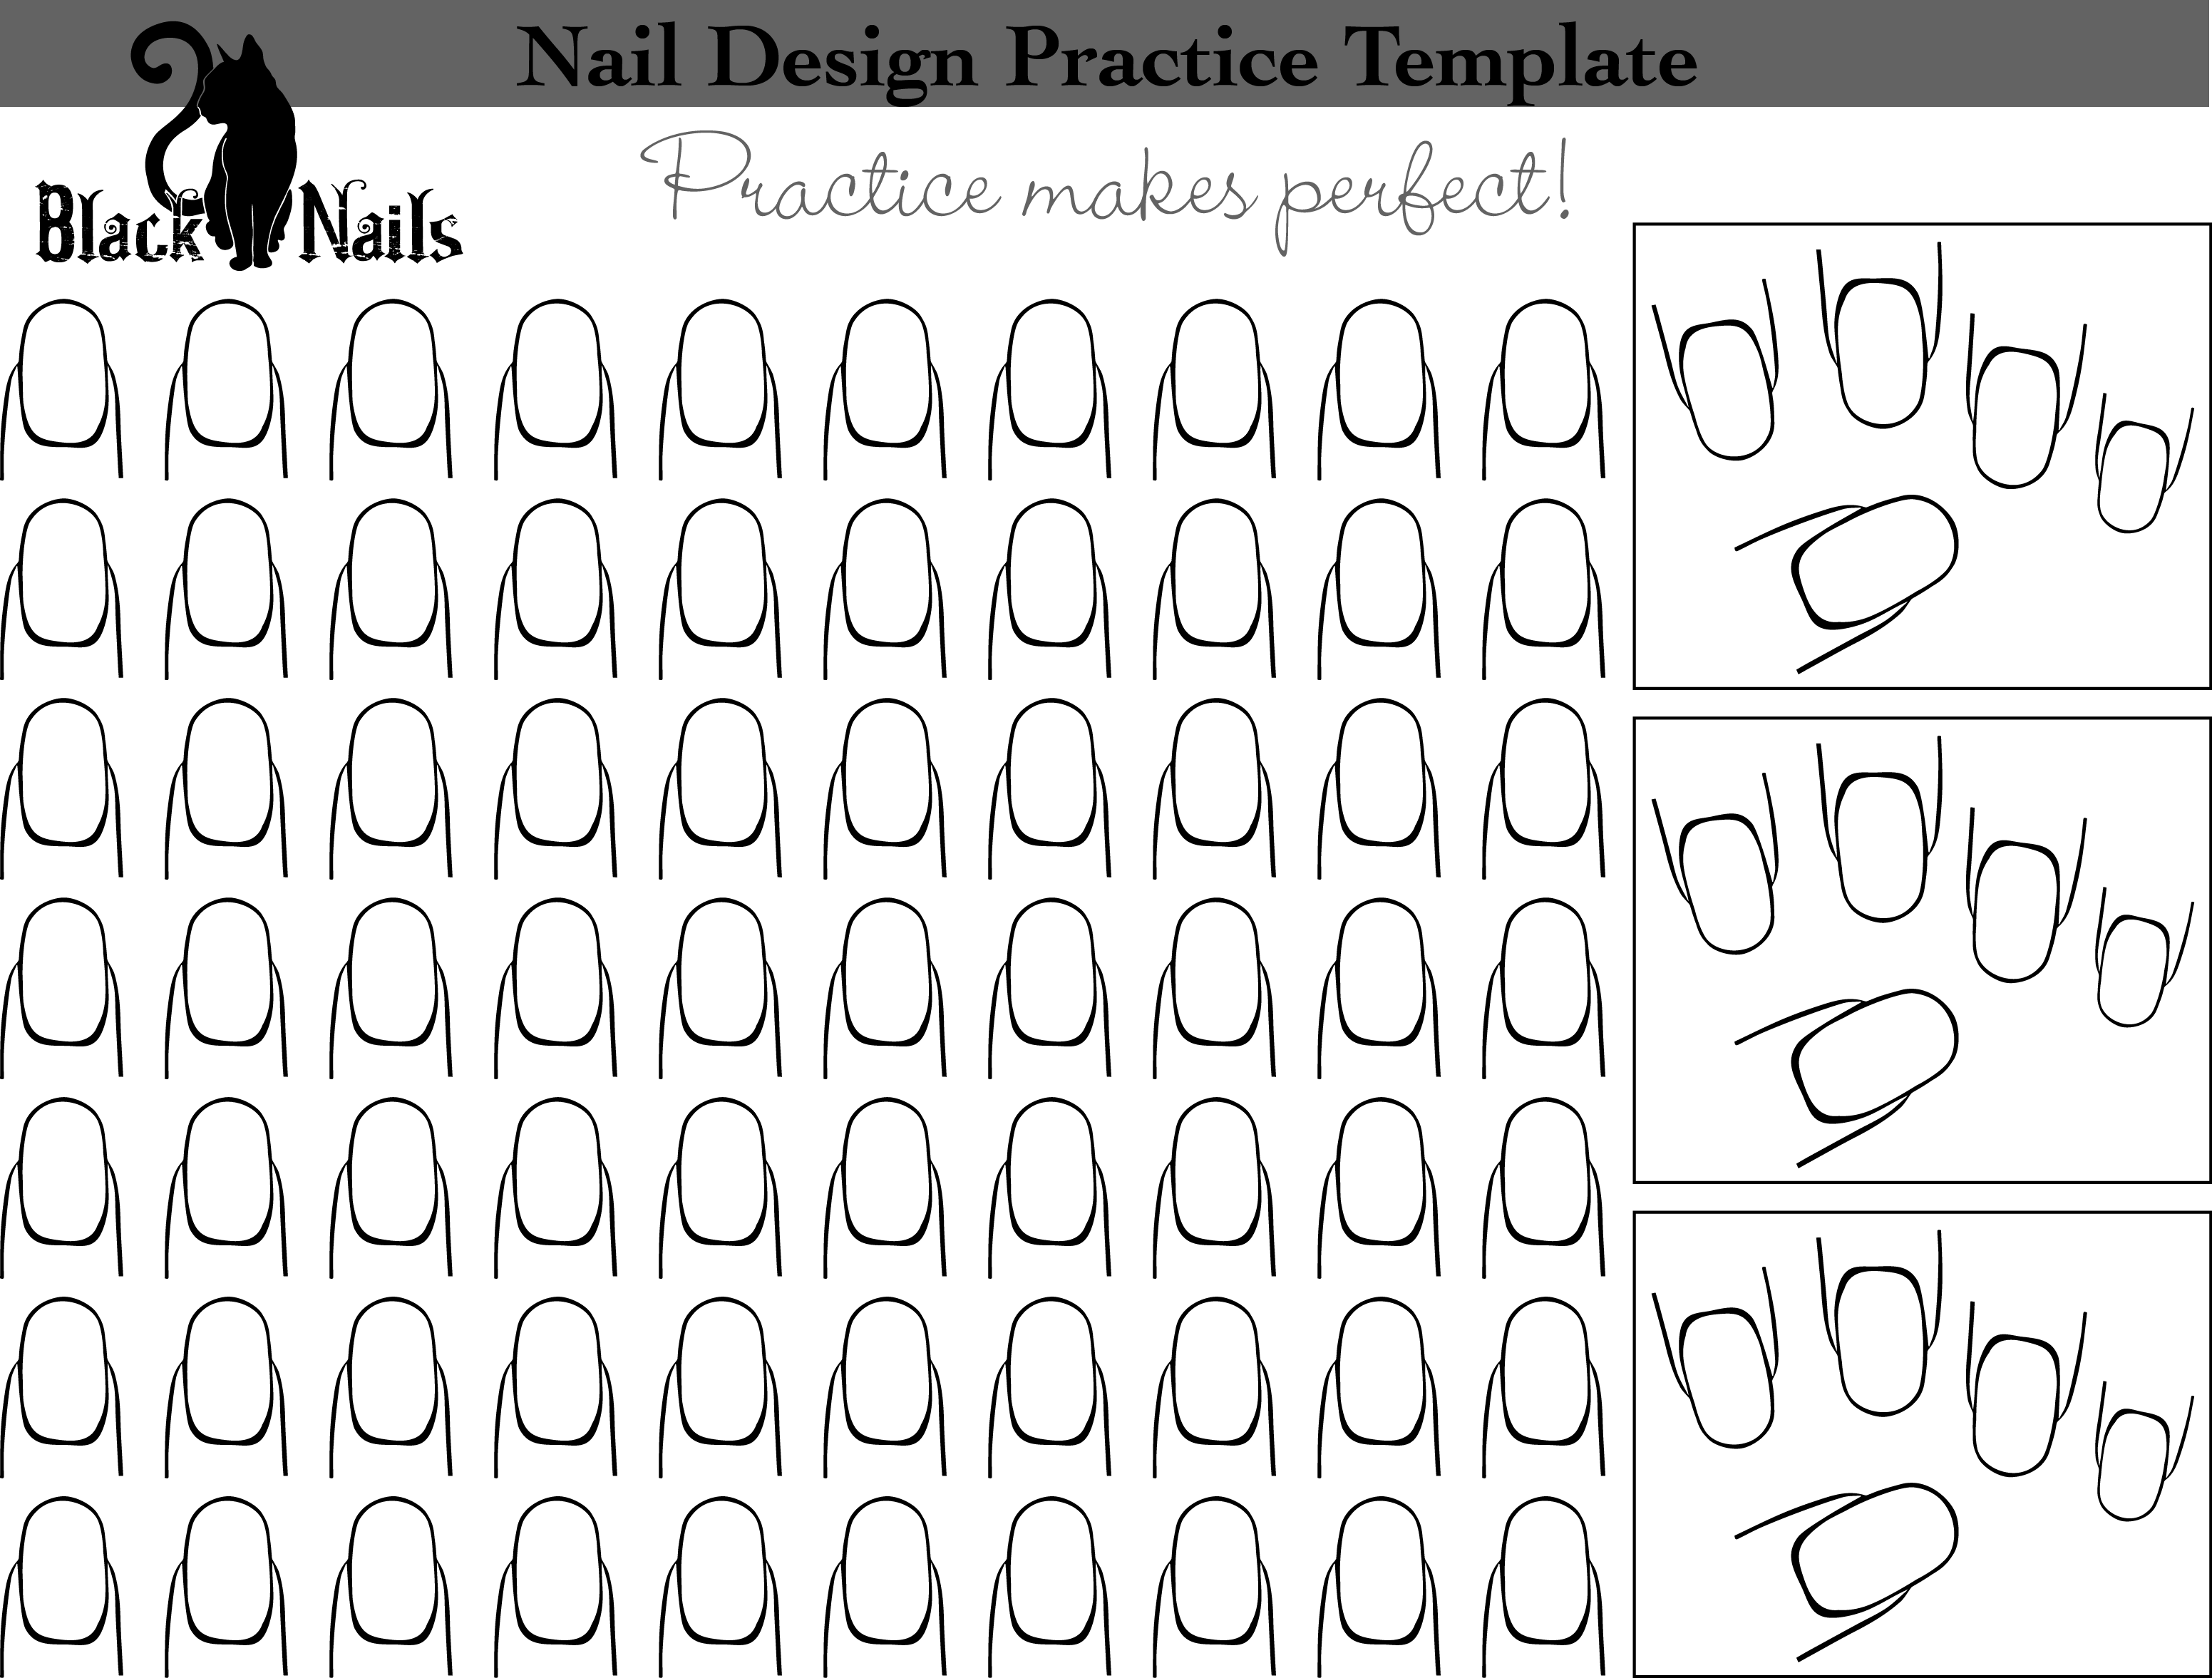 Oval Nail Art Design Practice Sheet